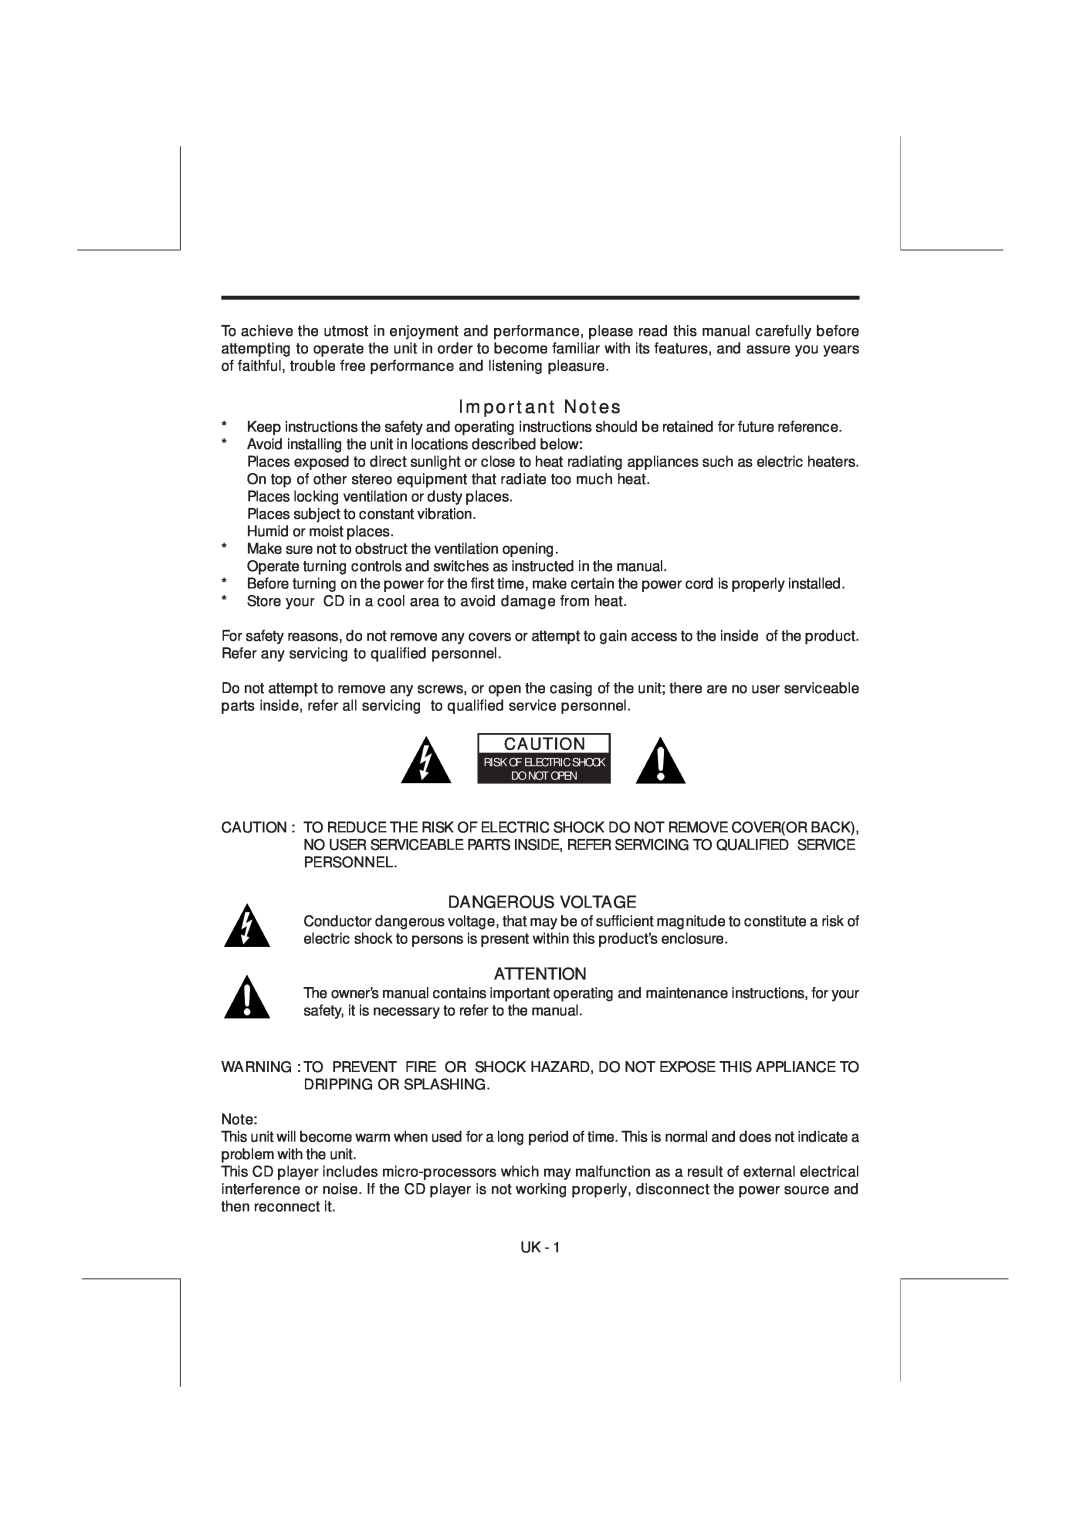 Curtis RCD-637 instruction manual Dangerous Voltage, Important Notes 